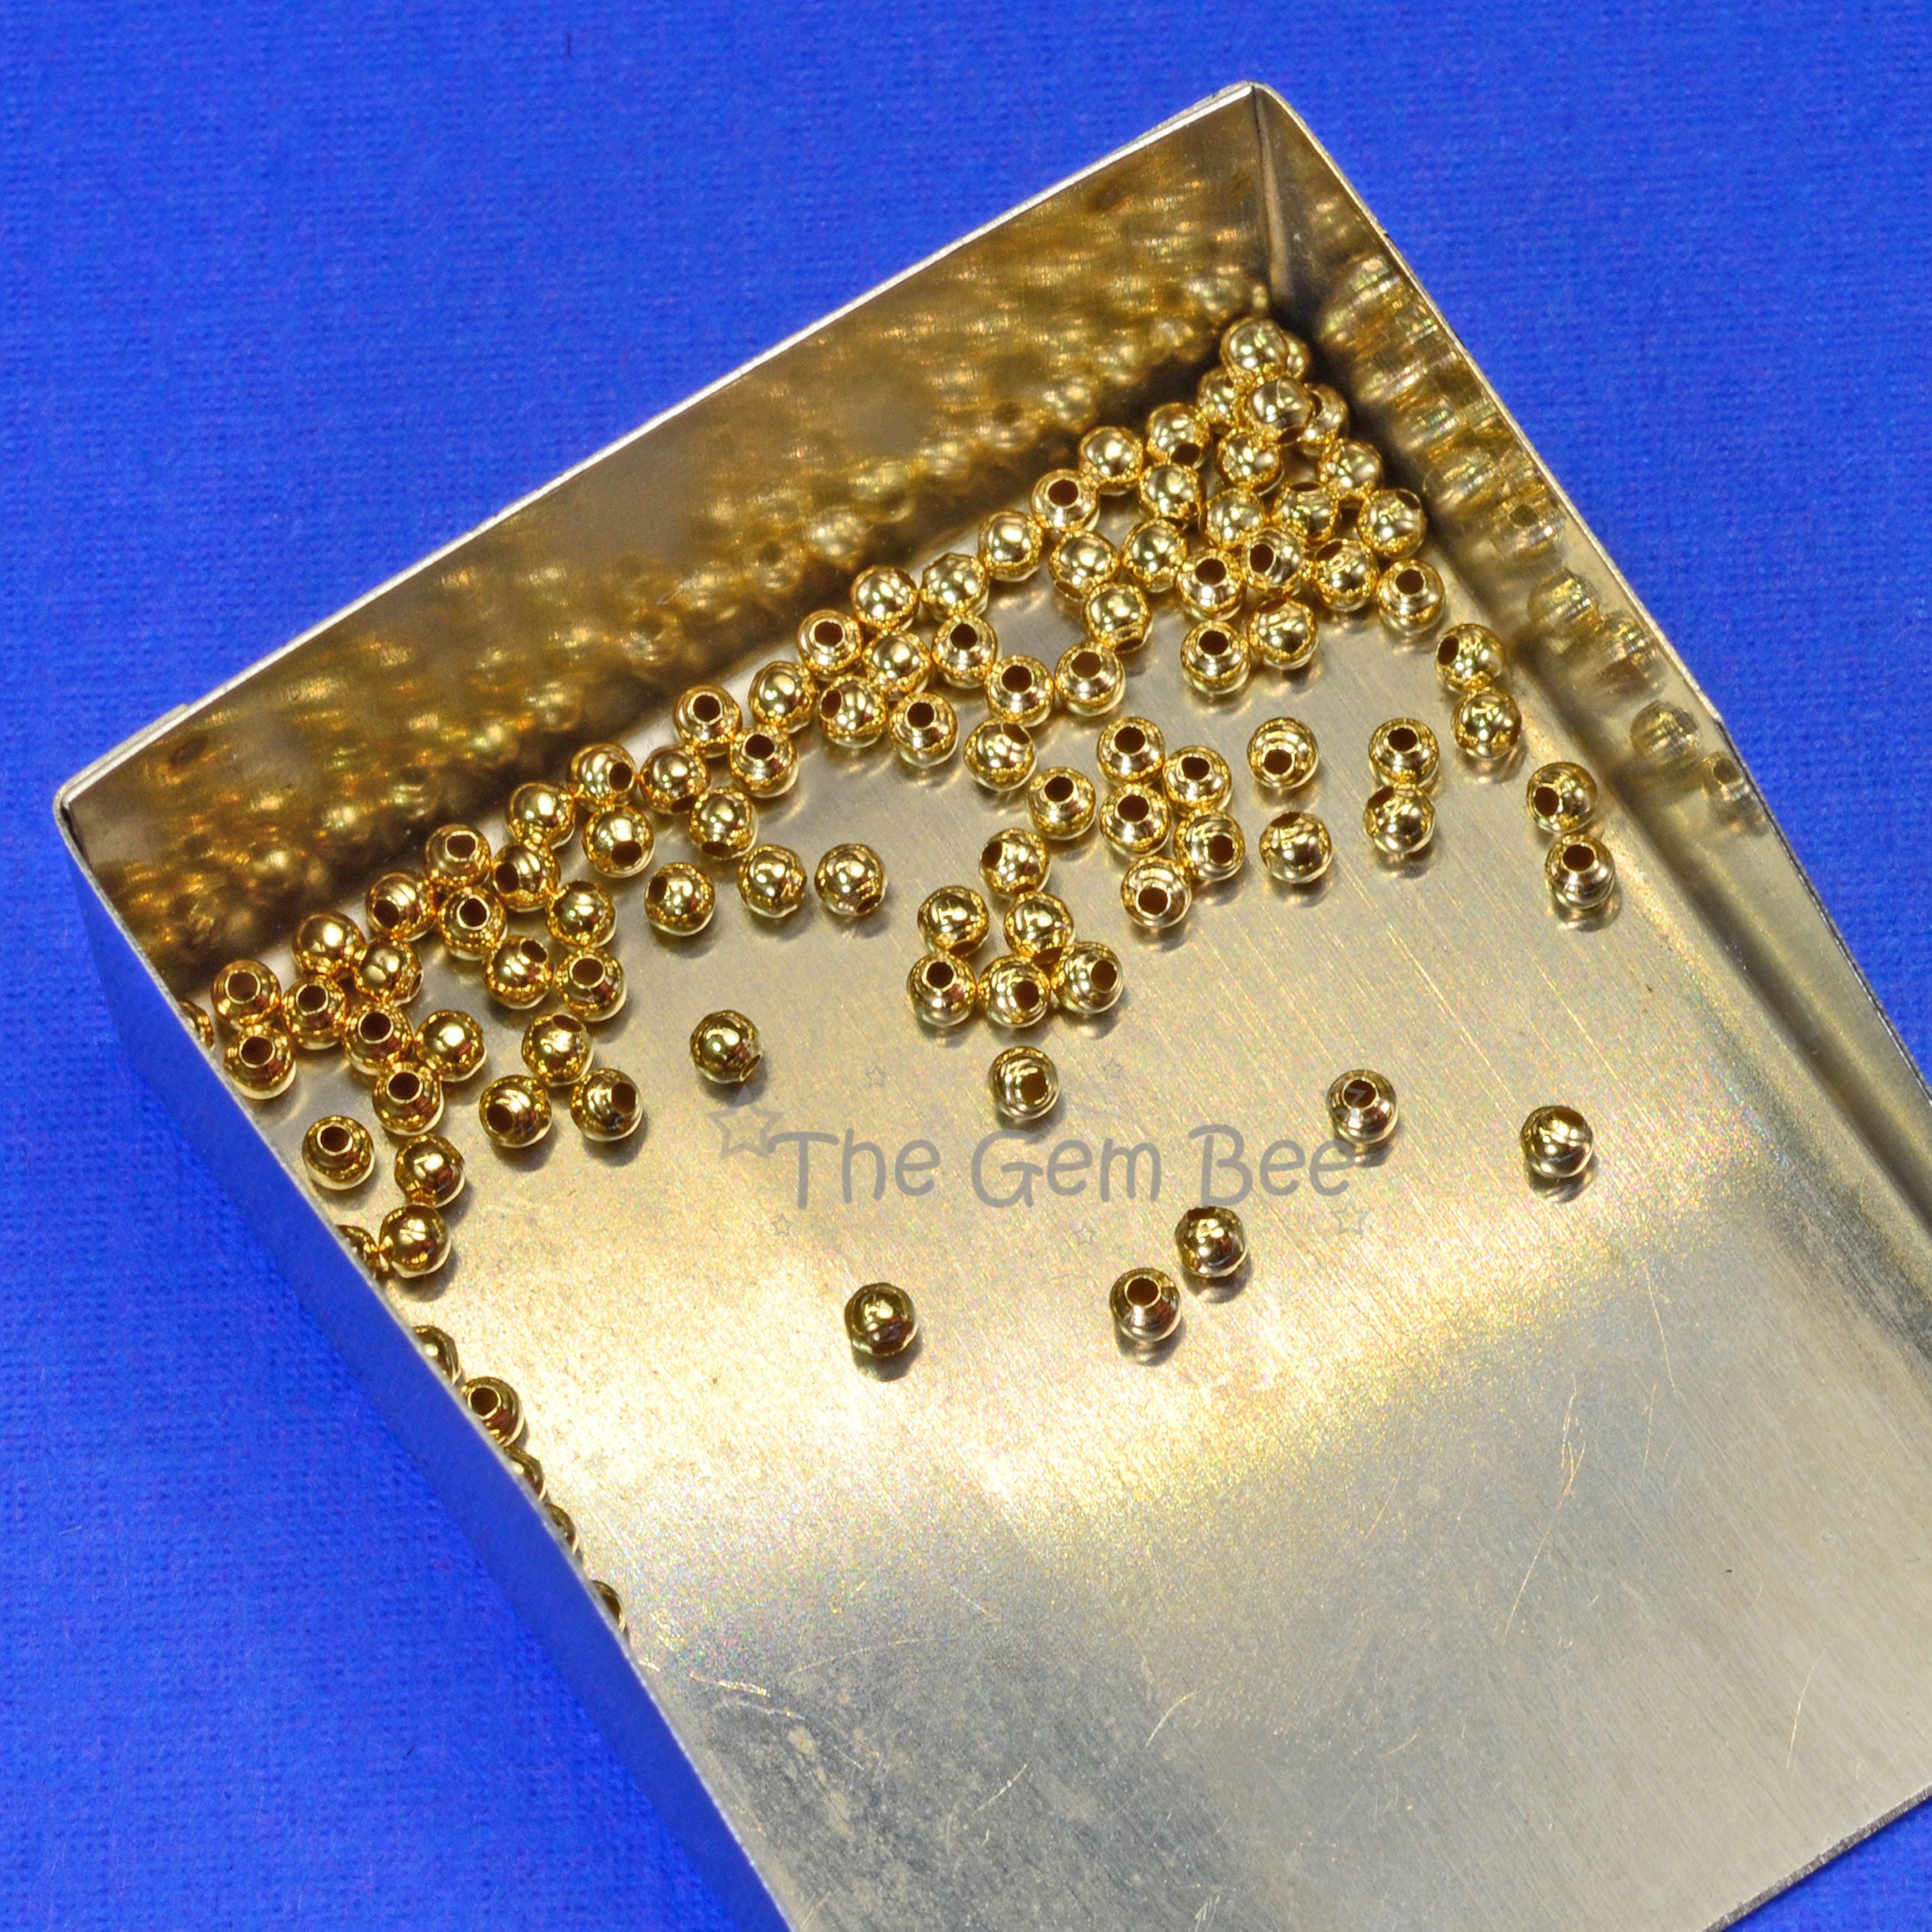 18k Gold Round Bead 2mm 2.2mm 3mm 4mm 5mm 6mm 7mm 8mm 10mm Light / Medium /  Heavy Weight Solid 18 Carat Gold Round Spacer Bead 